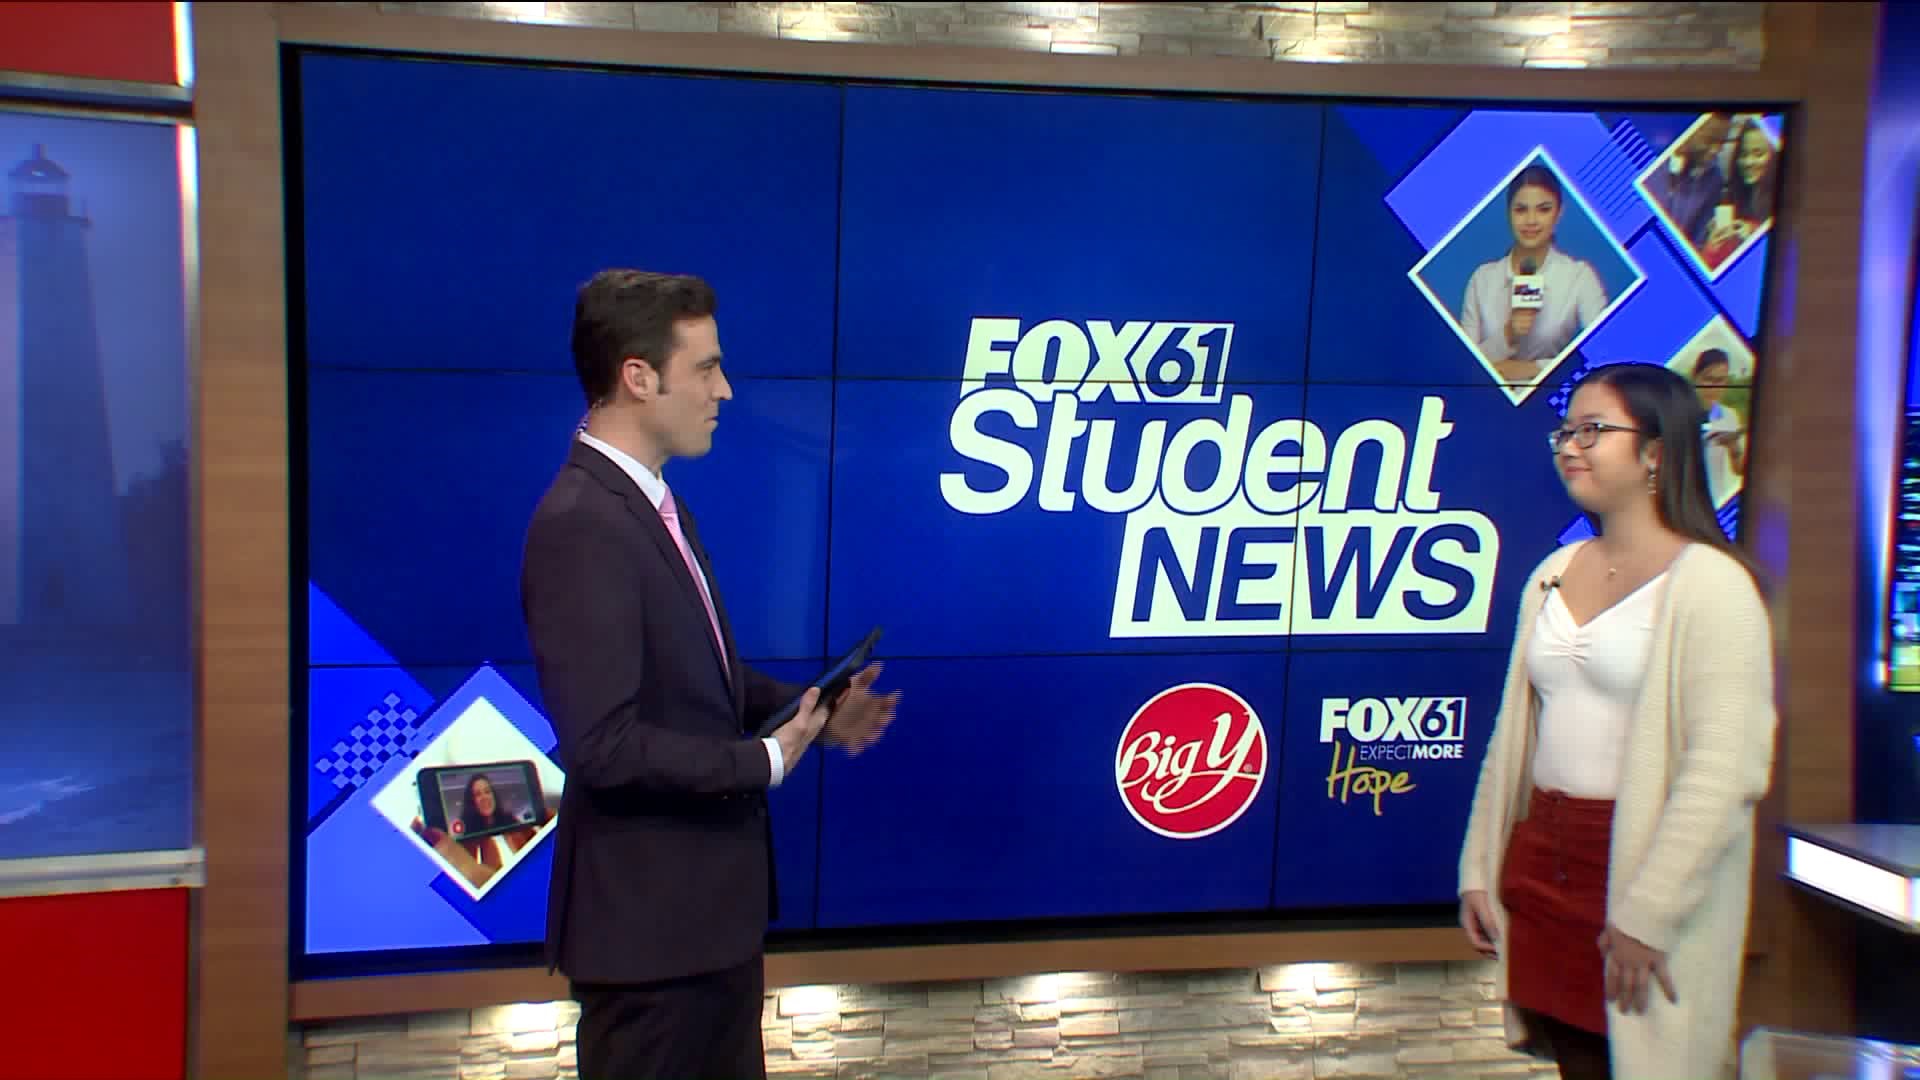 FOX61 Student News launch